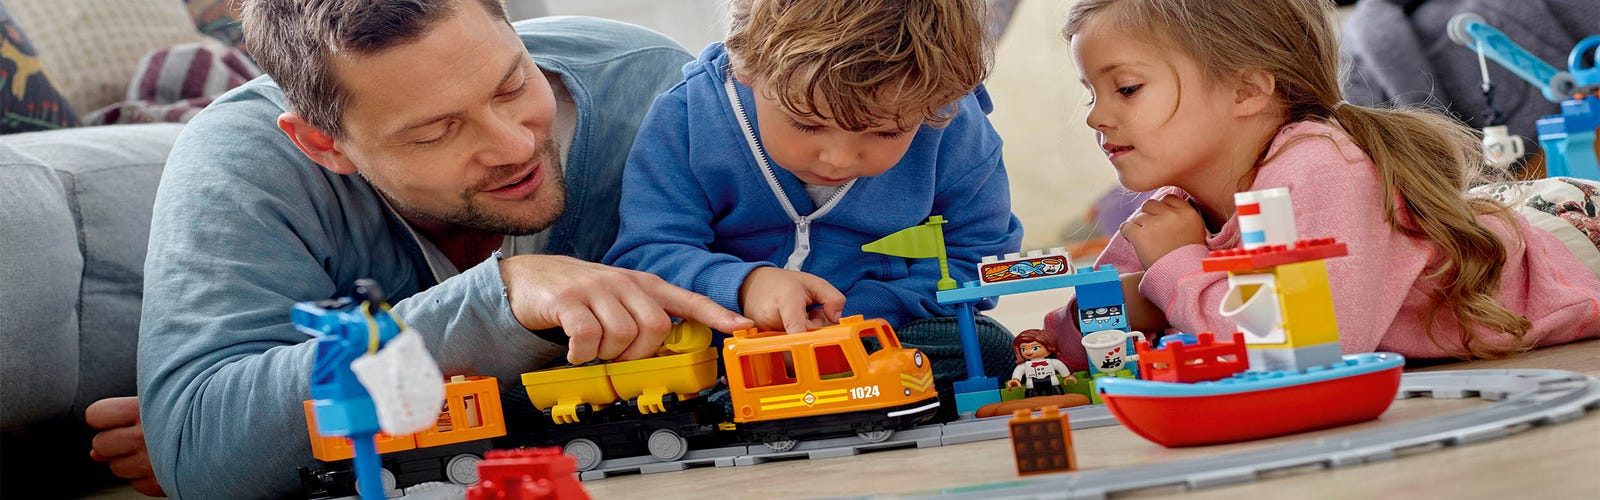 LEGO DUPLO train set: Train Engine & Cars, BRIDGE, Switches, Overpass, TRACK